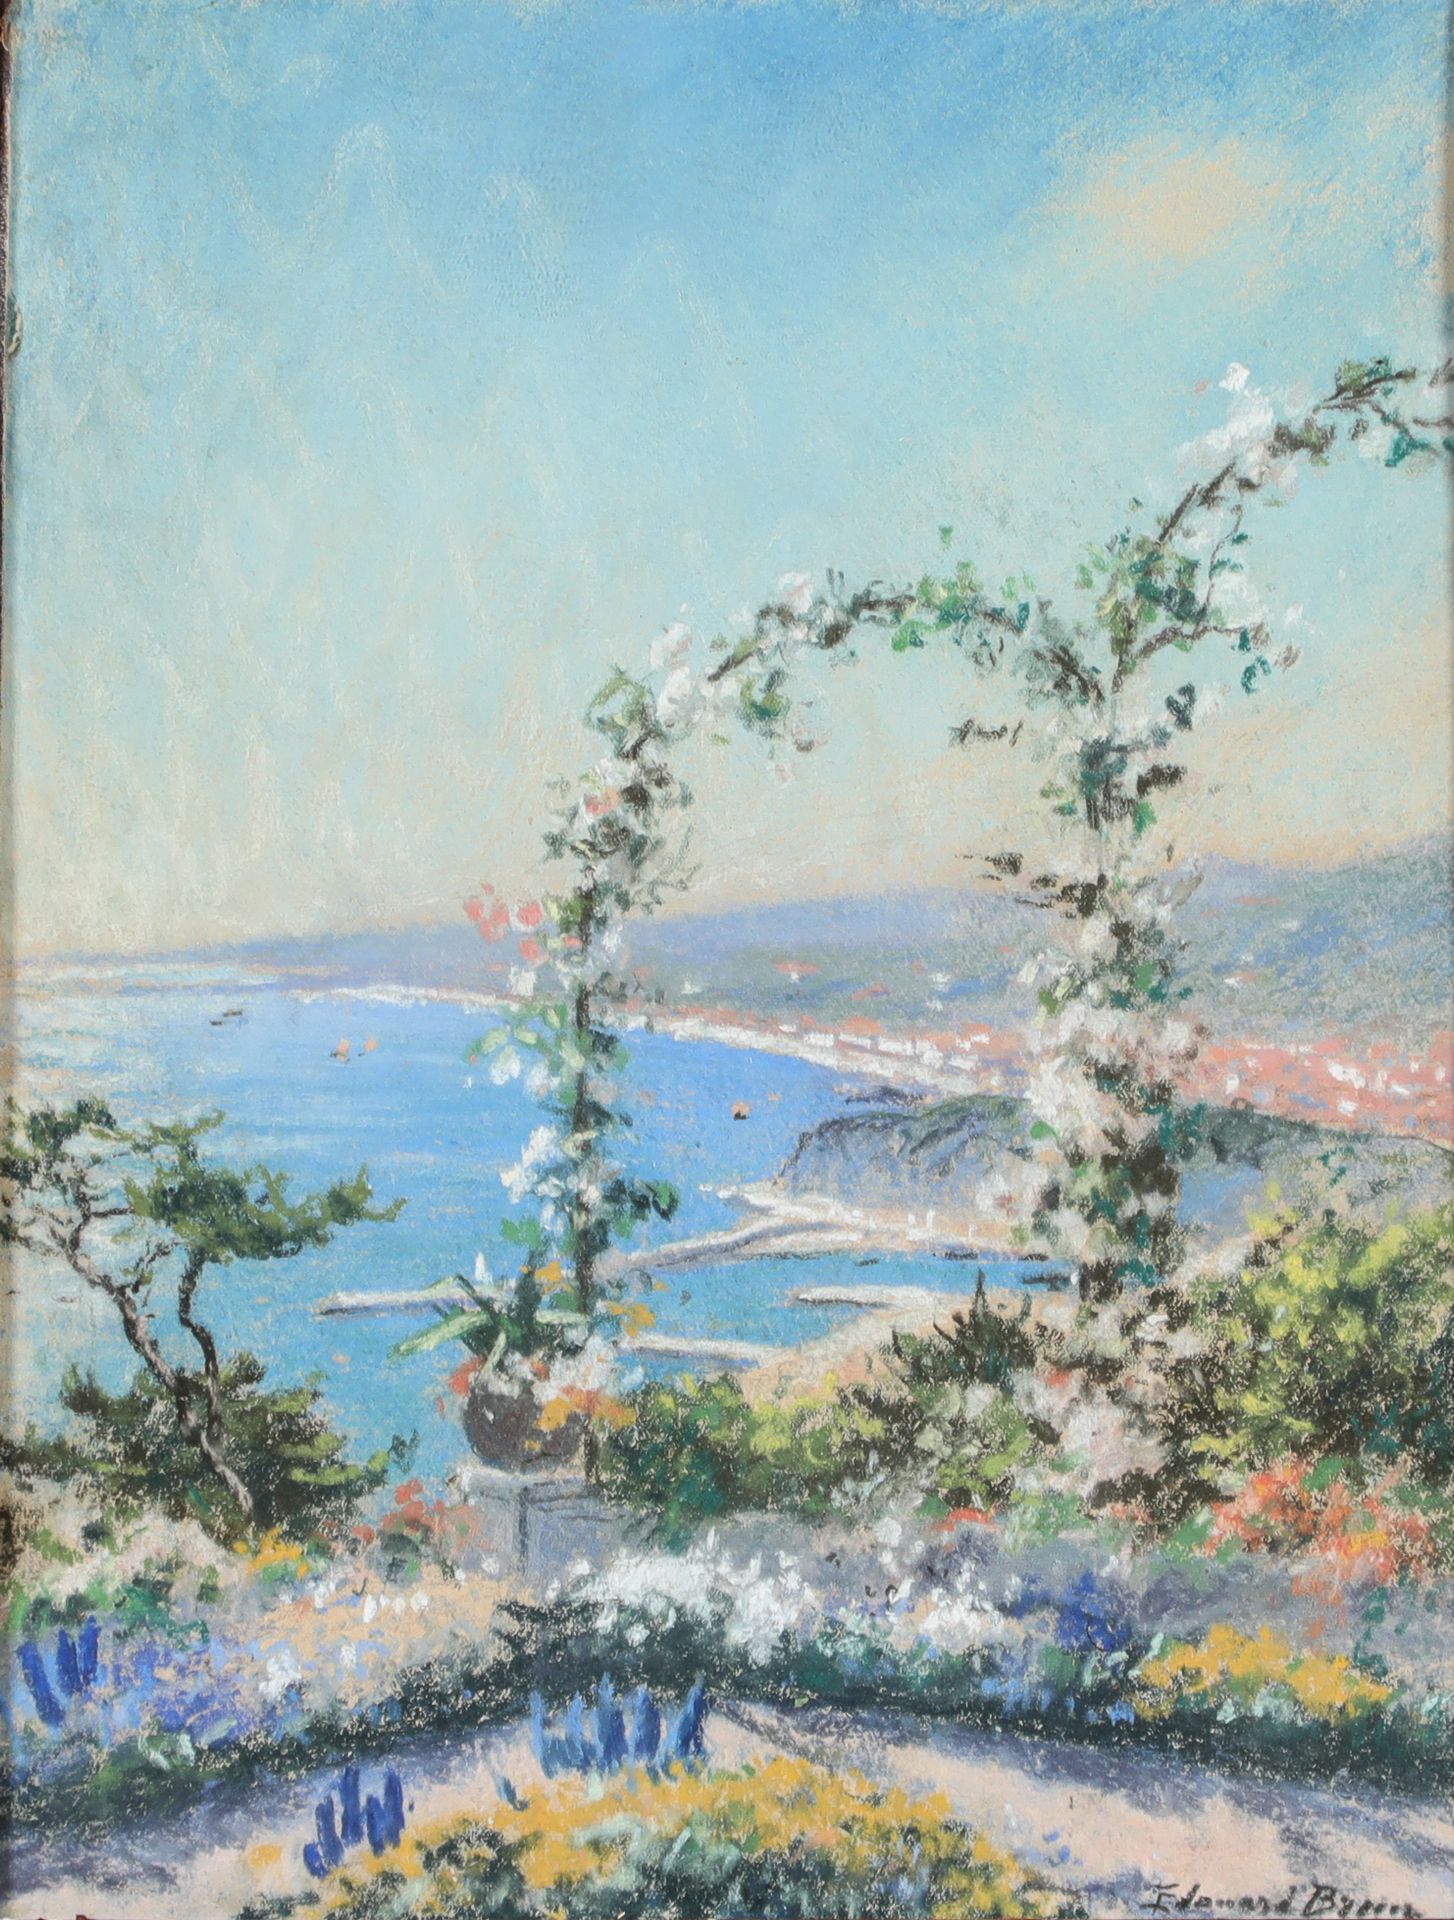 Null 爱德华-布朗 (1860-1935) 
蔚蓝海岸的景色 
纸上粉笔画，右下角有签名 
31 x 22 cm